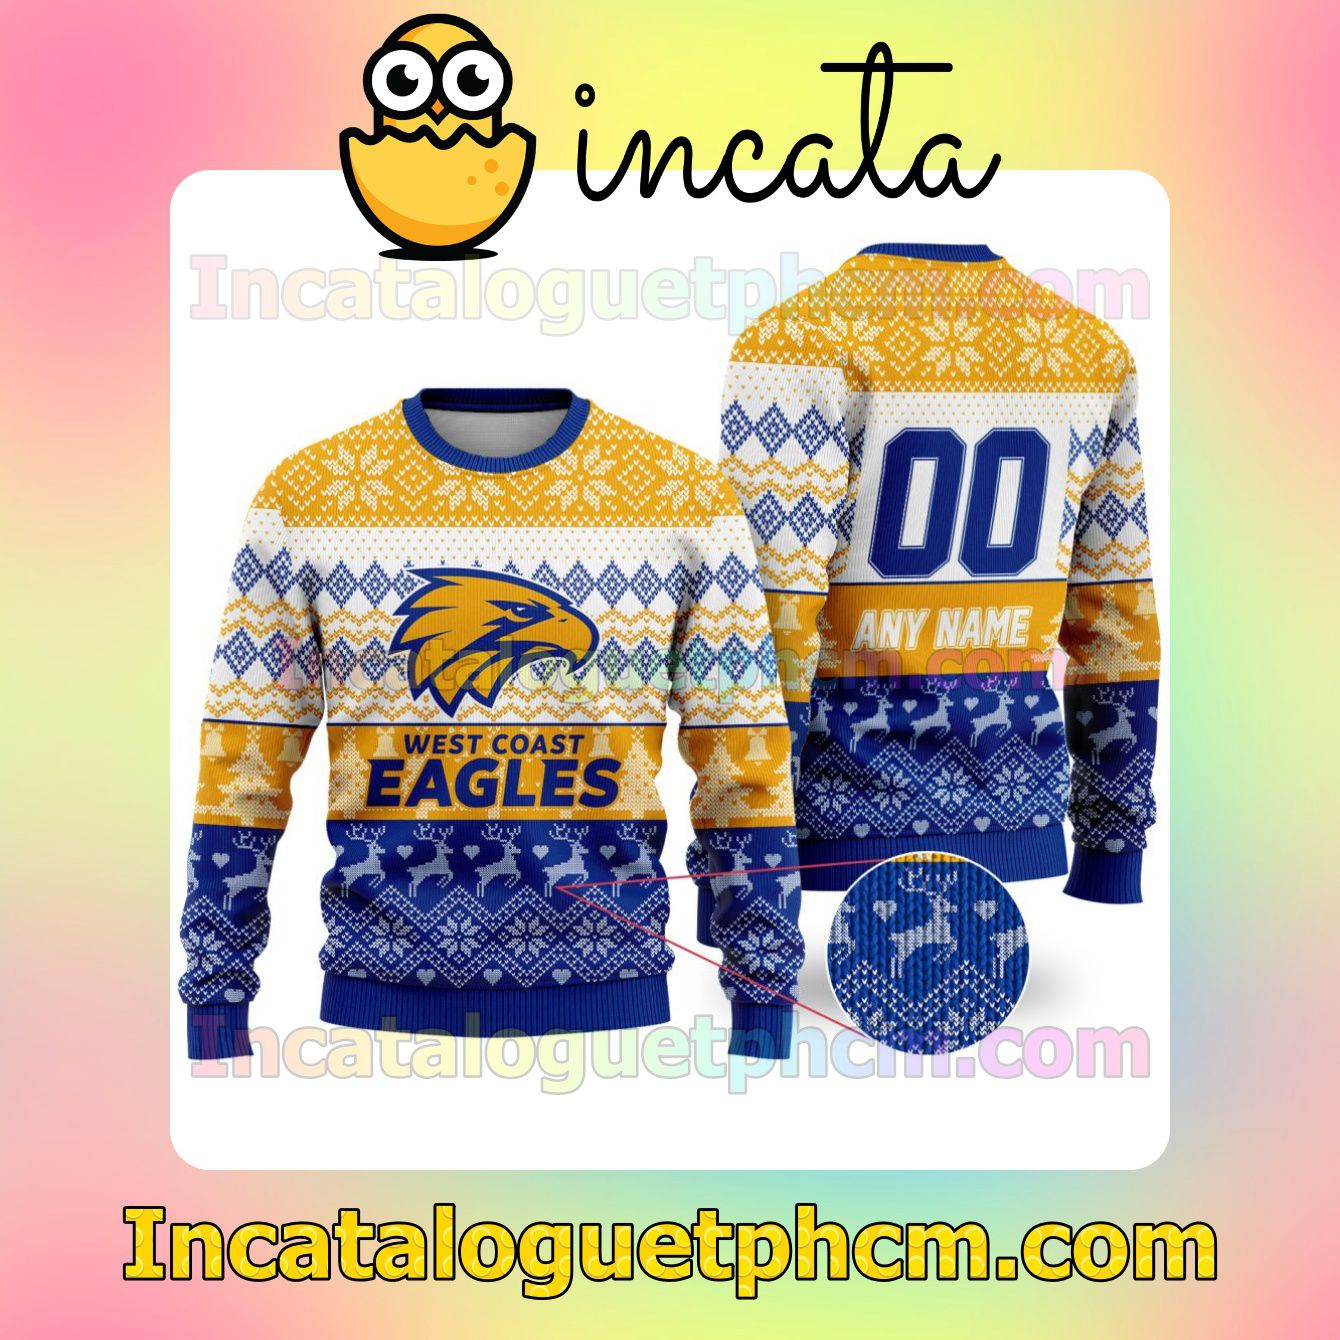 AFL West Coast Eagles Ugly Christmas Jumper Sweater